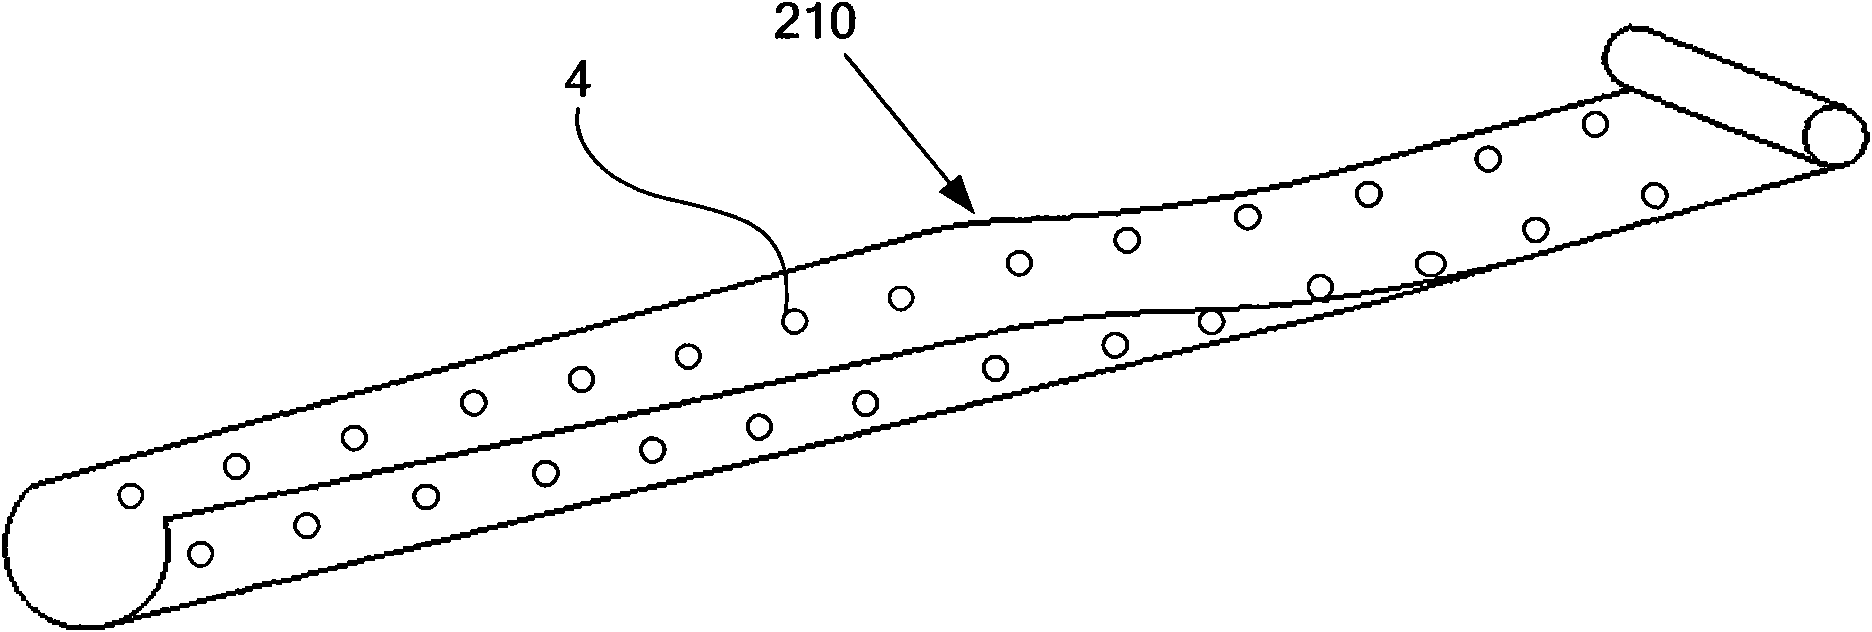 Thin-wall sleeve-type space development mechanism